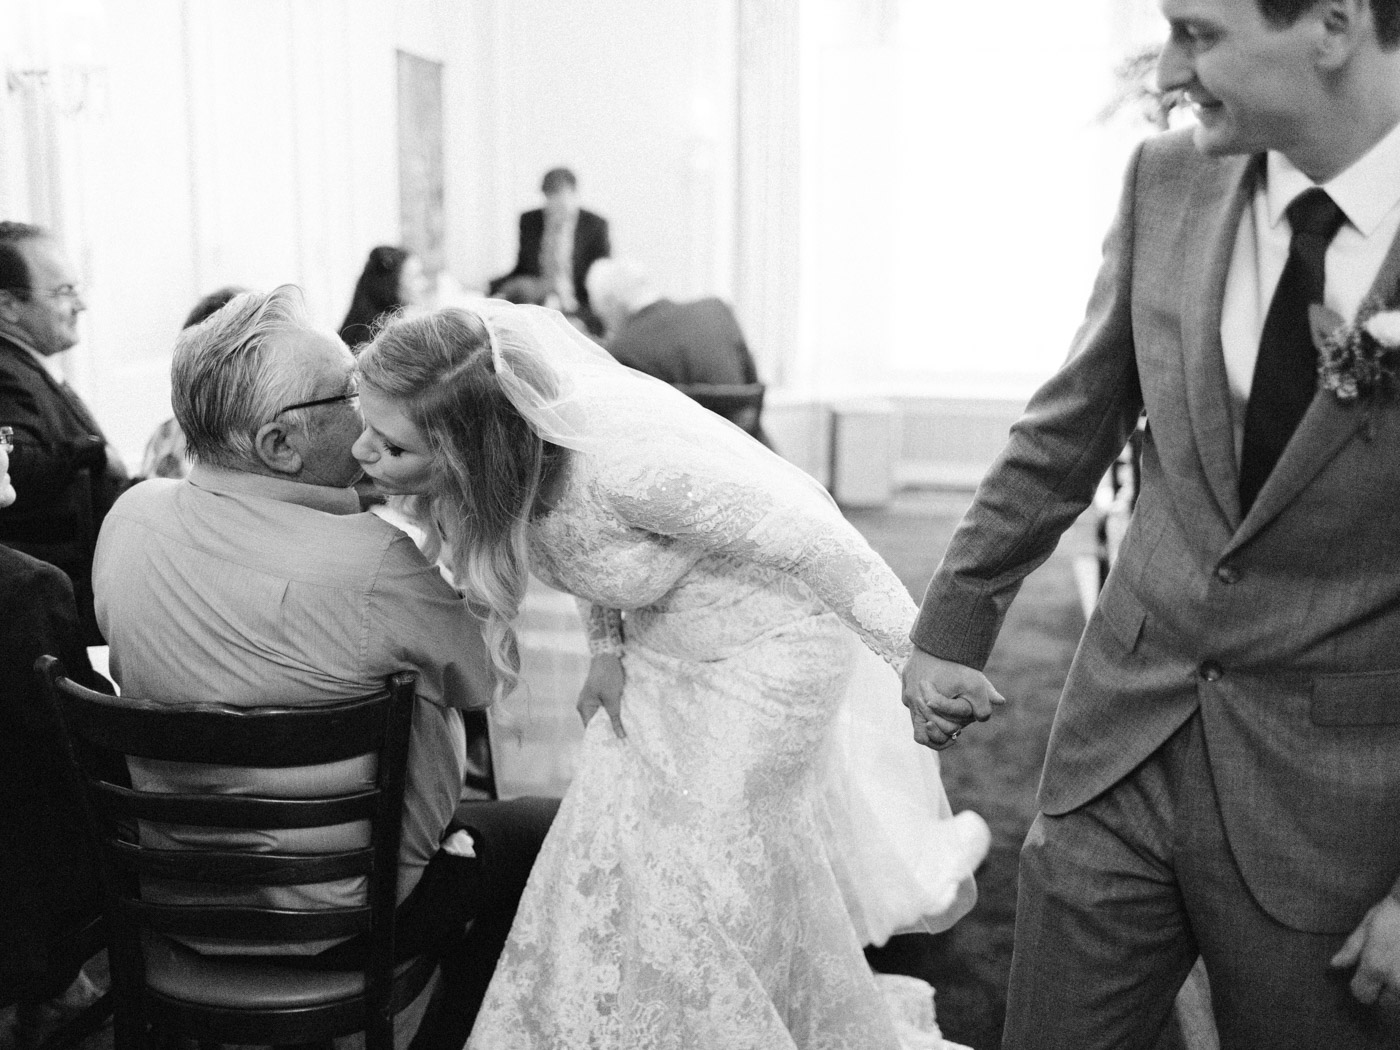 Toronto-wedding-photographer-intimate-classic-fine-art-elopement-ottawa34.jpg